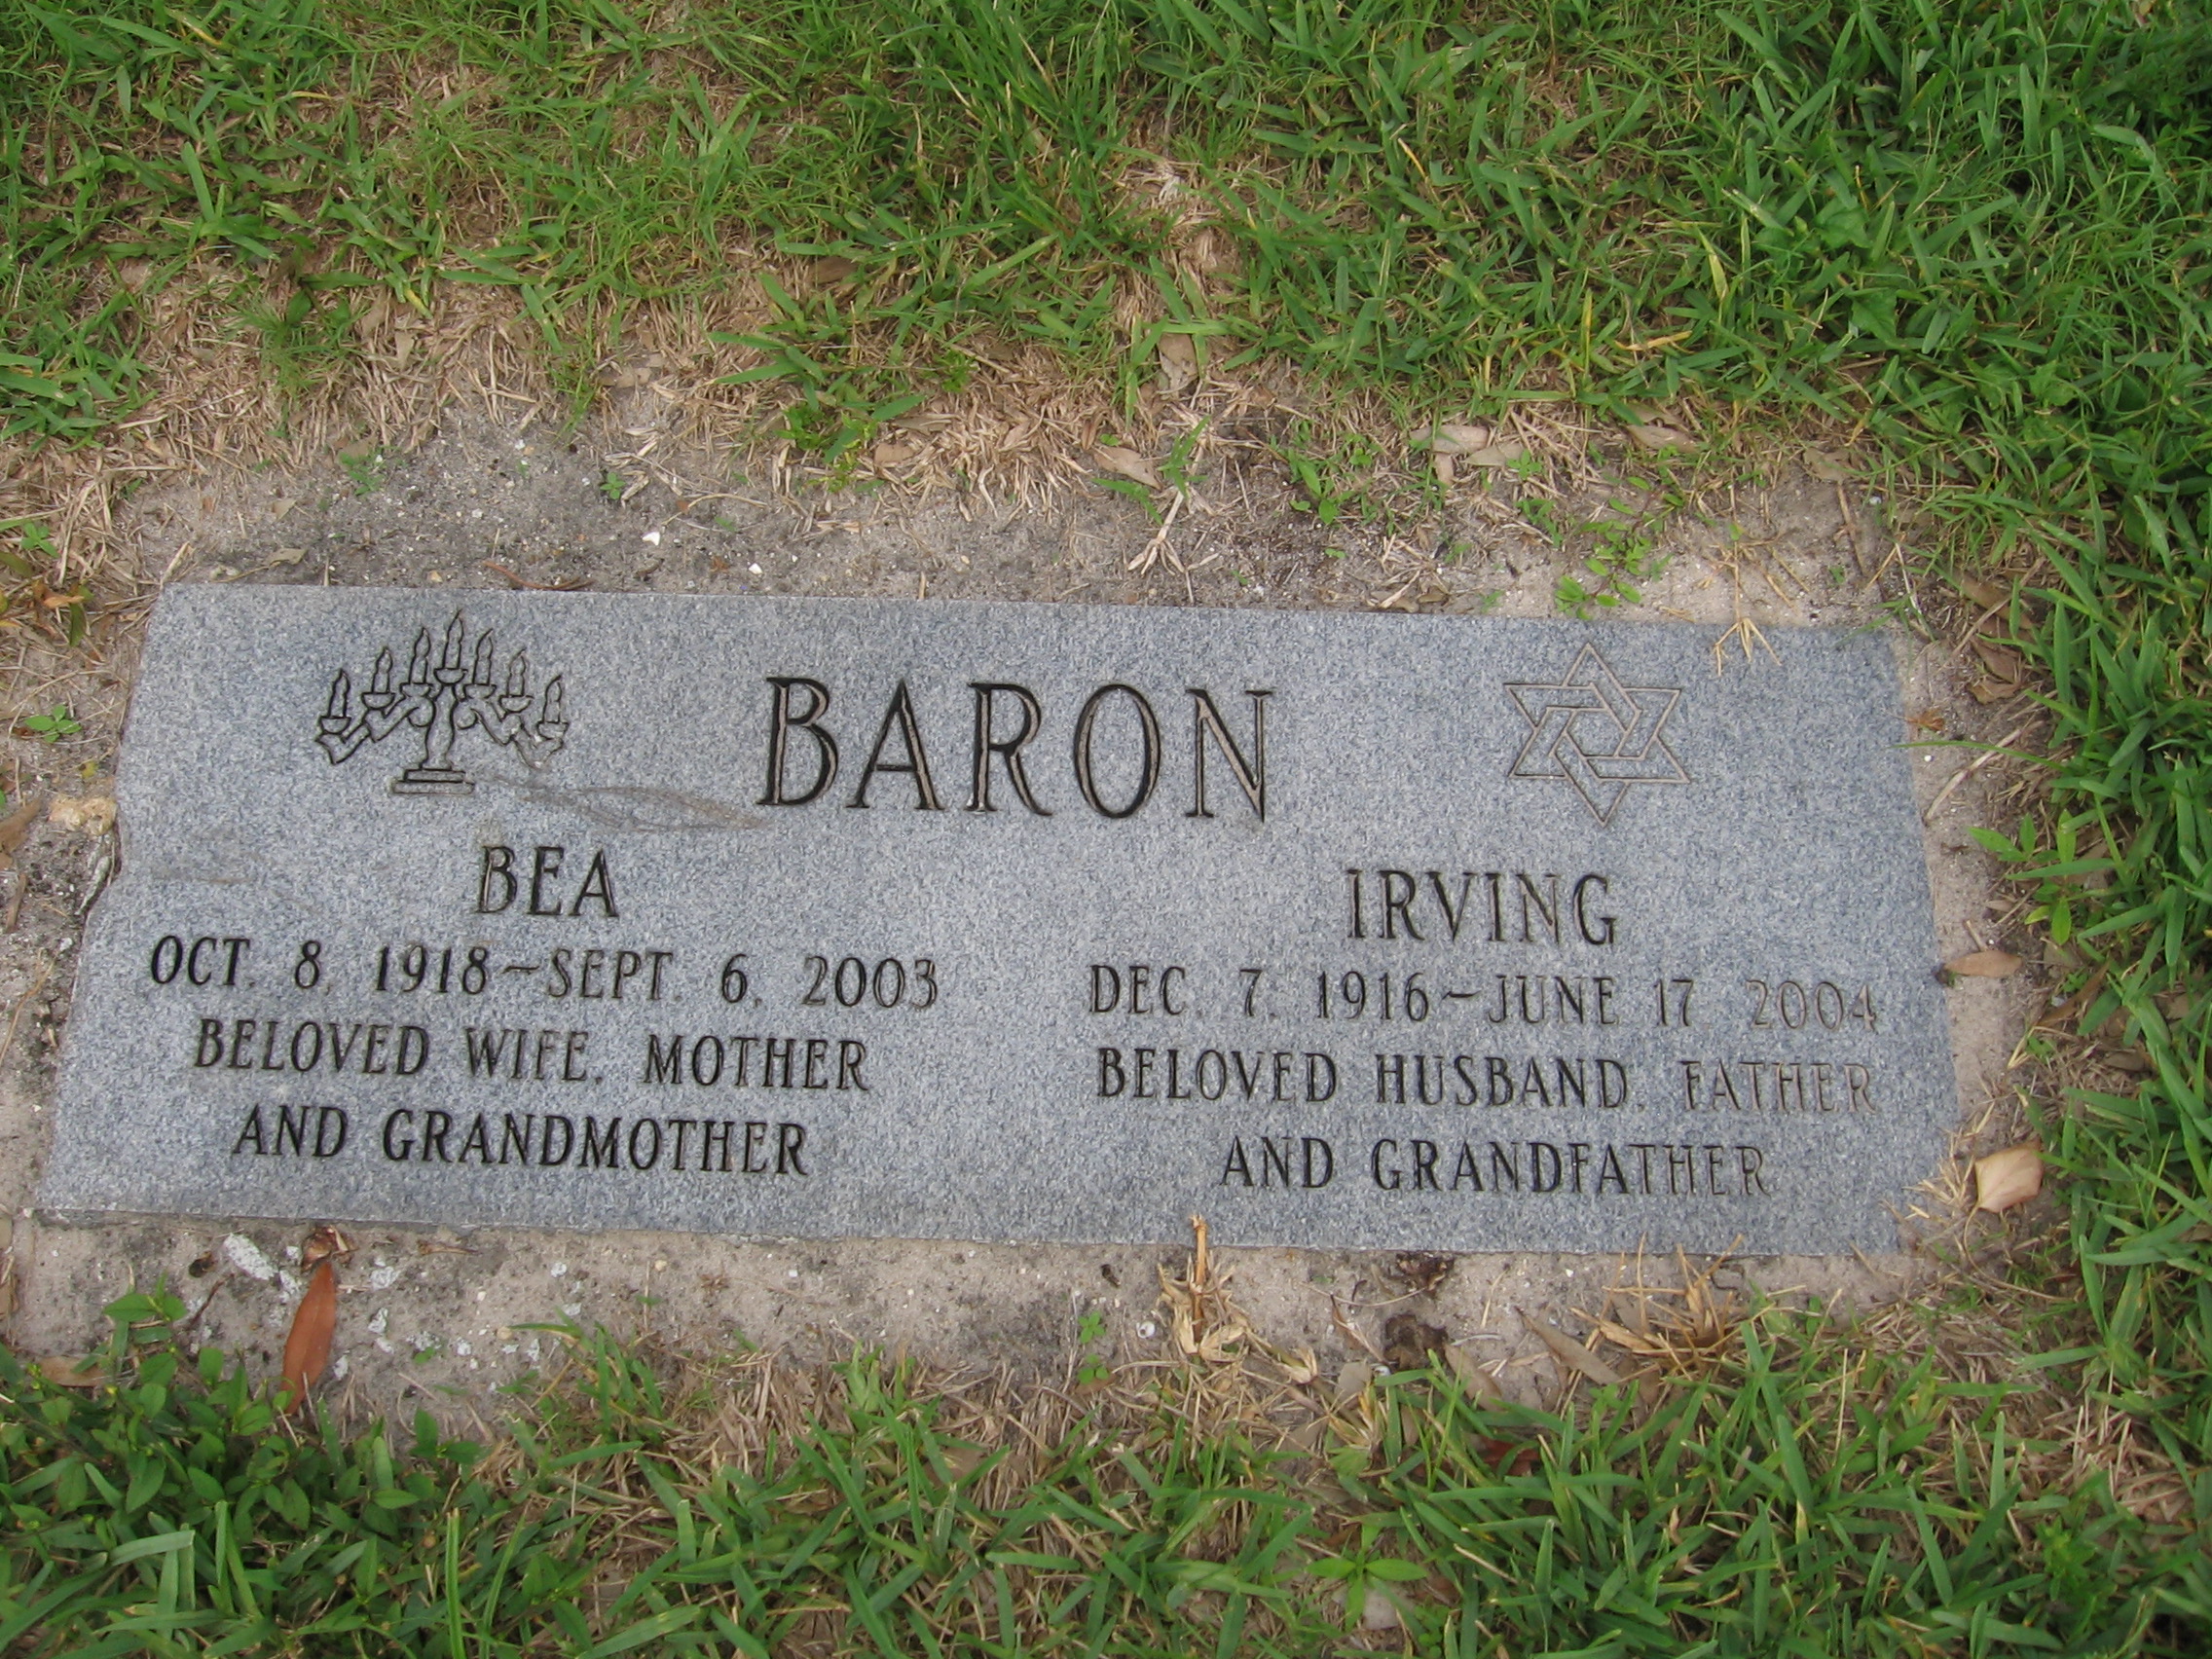 Bea Baron